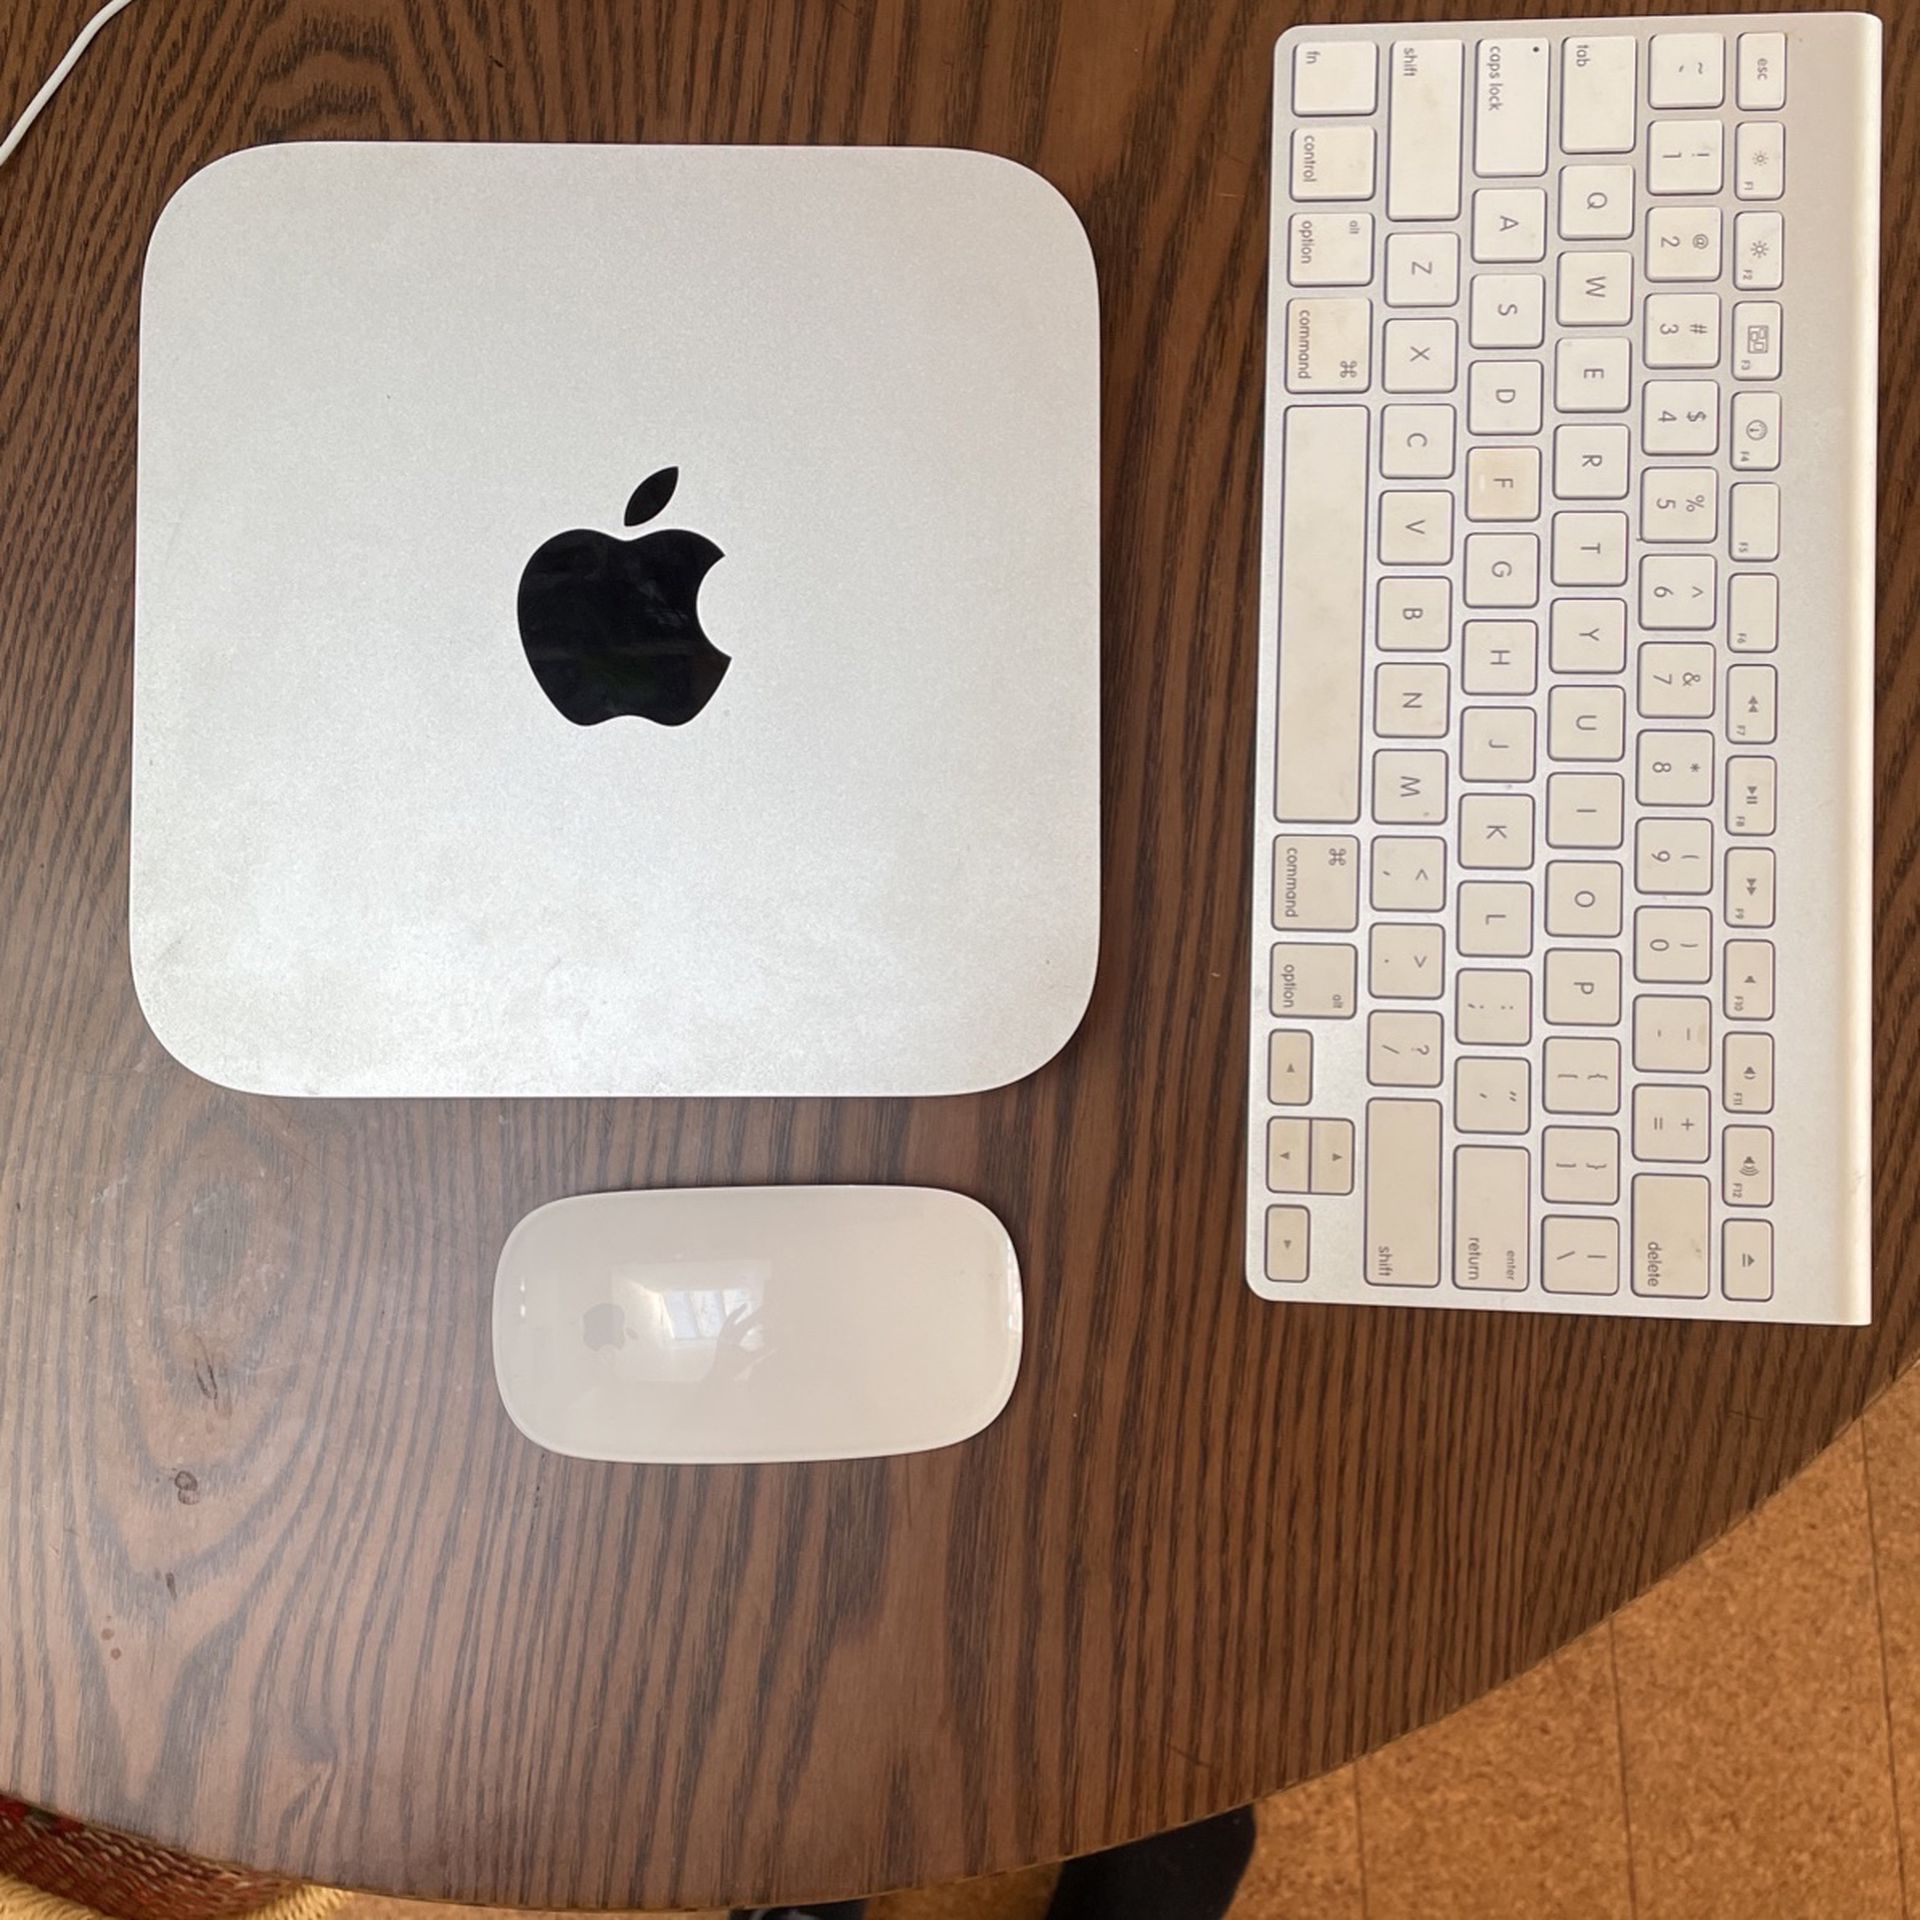 Apple Mac Mini I5 2.6GHZ , Magic Keyboard, Wireless Mouse